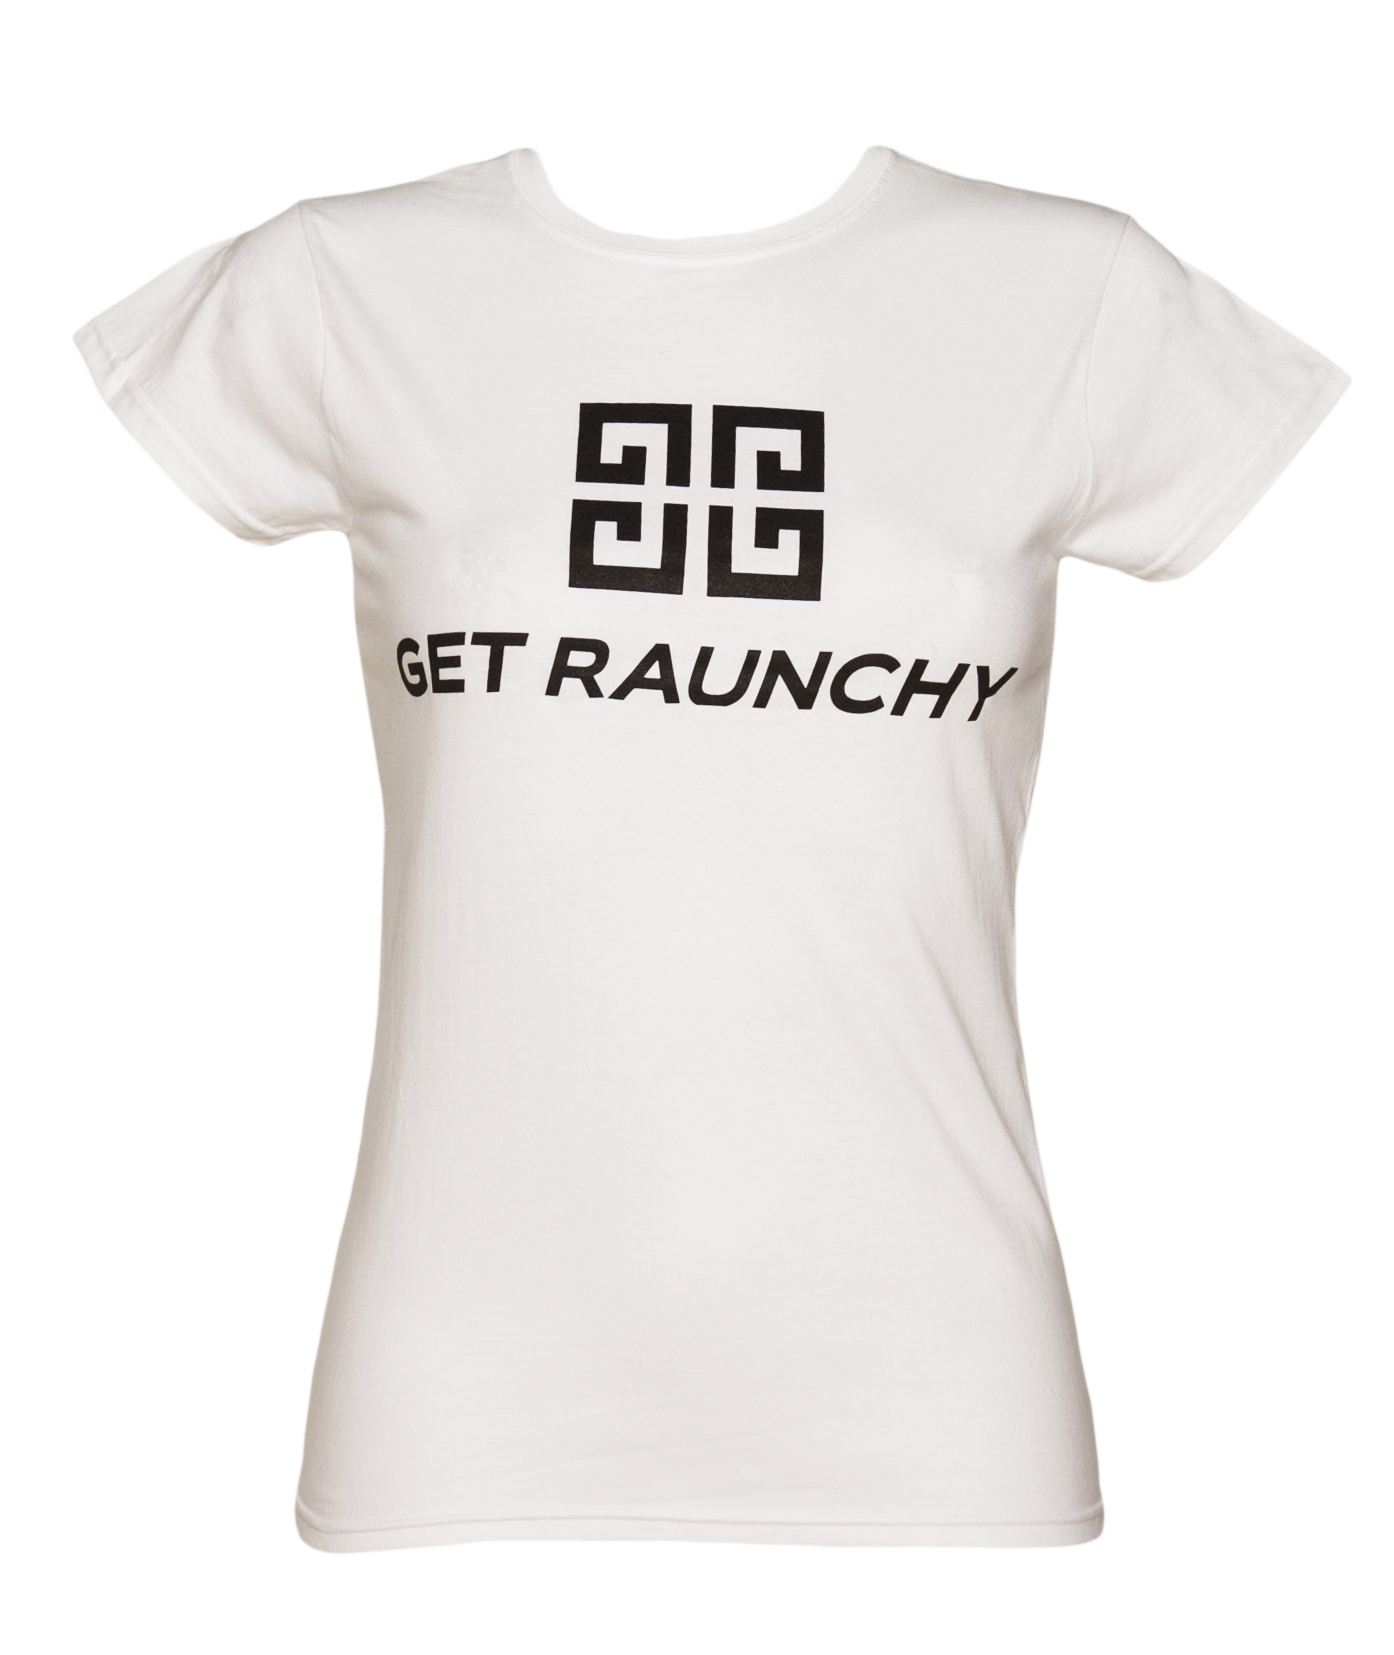 Ladies White Get Raunchy Parody T-Shirt from